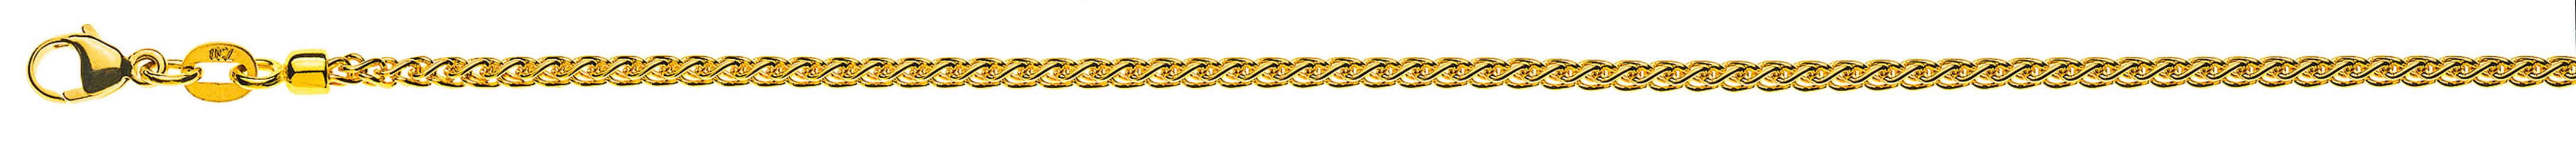 AURONOS Prestige Necklace yellow gold 18K cable chain 42cm 2.15mm